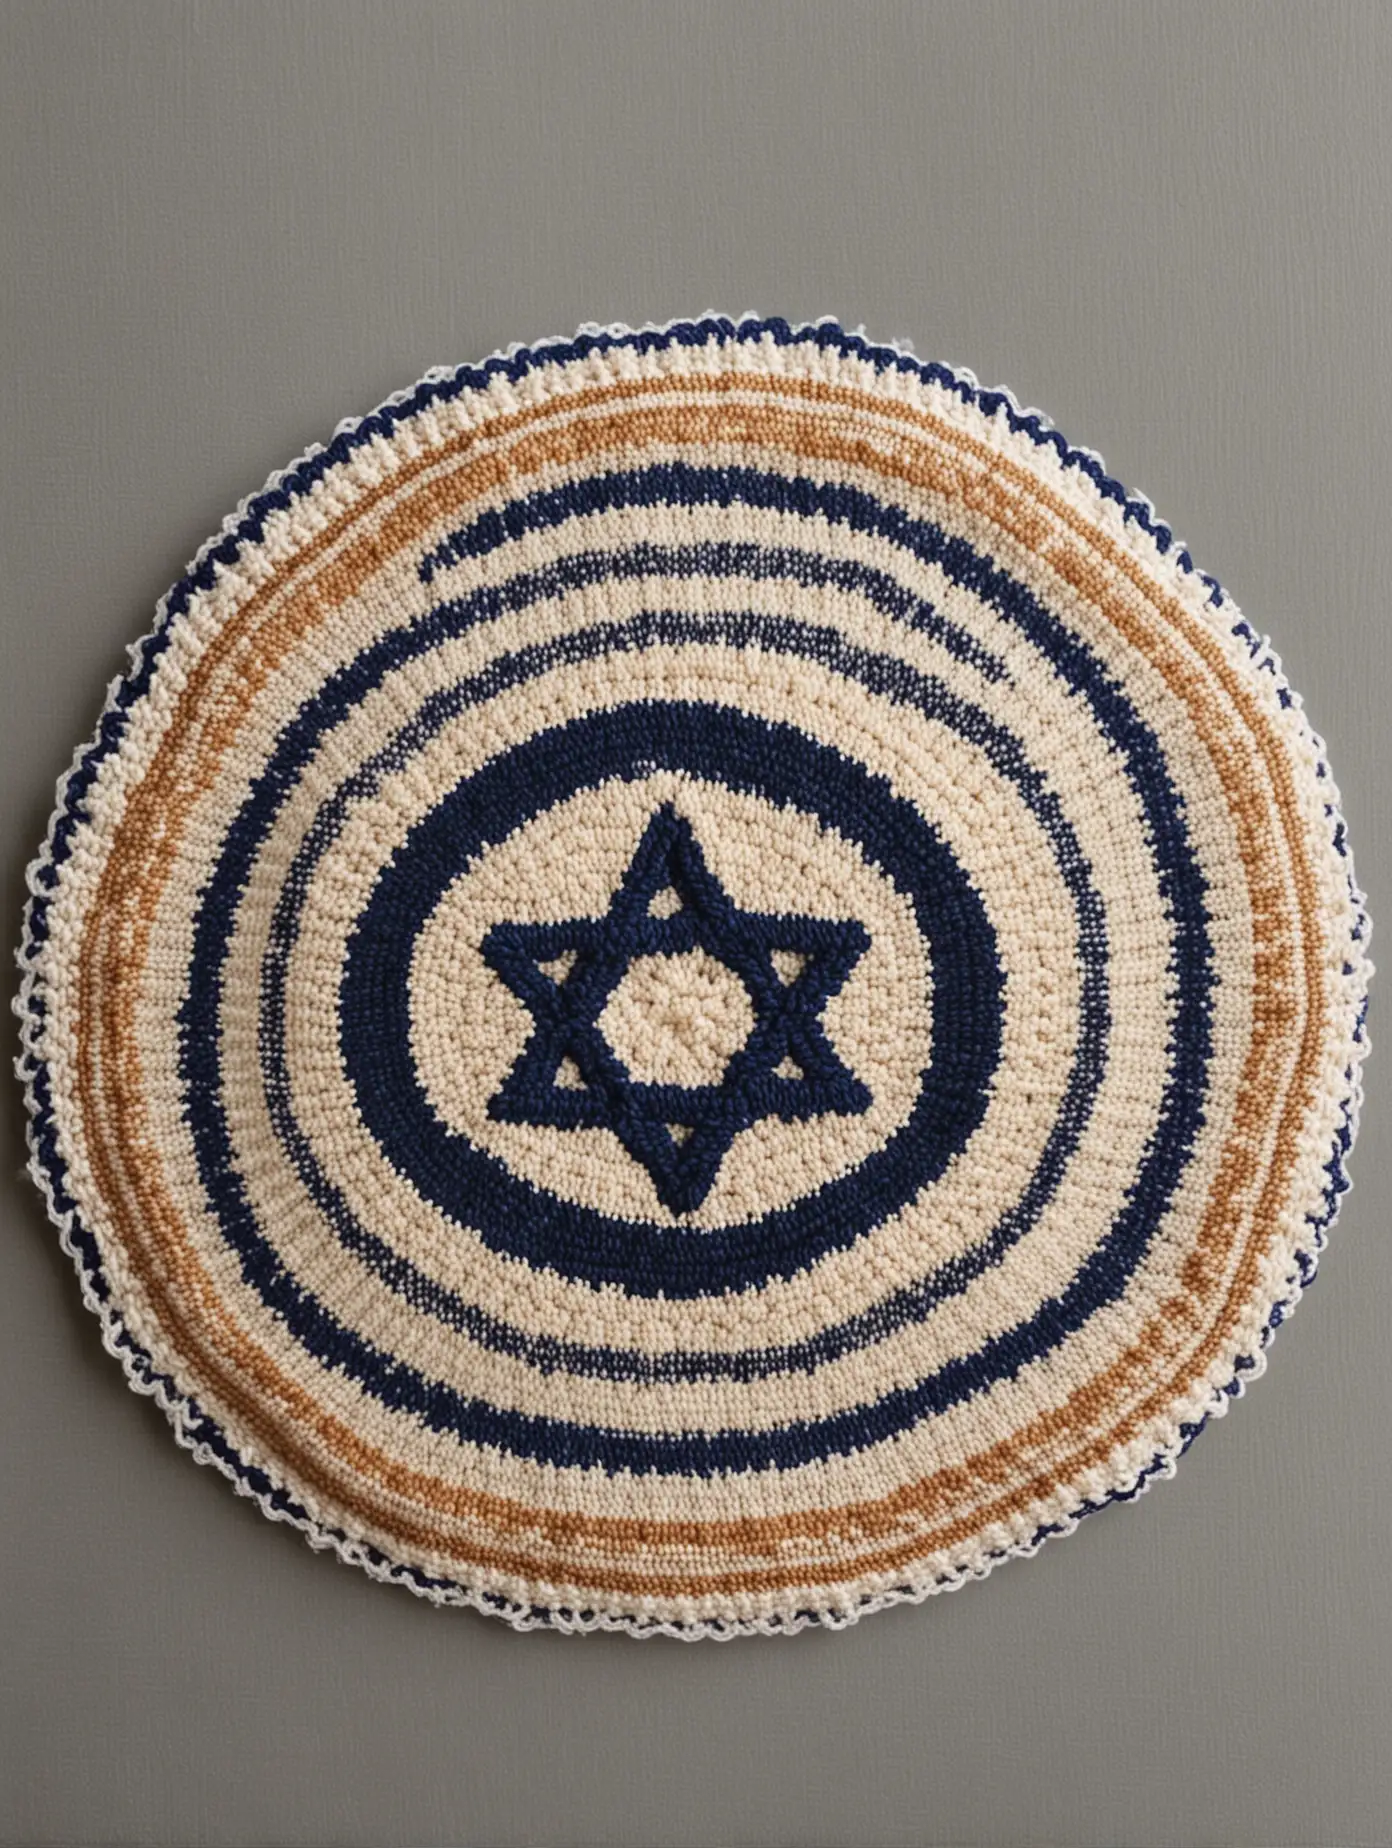 Israeli round knitted kippah